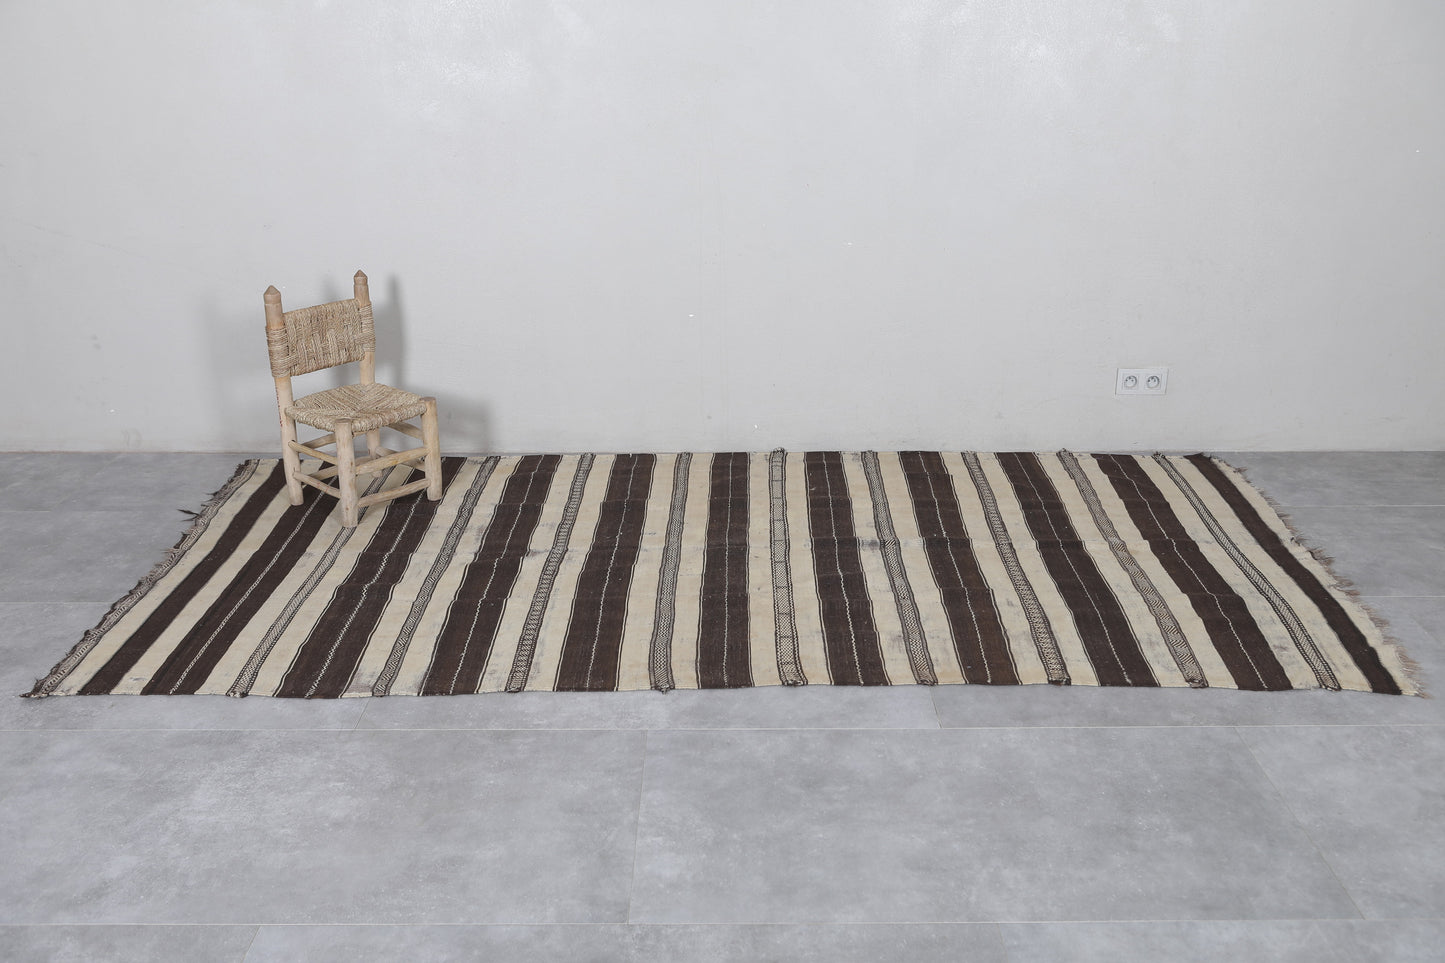 Moroccan rug kilim 4.9 FT X 9.9 FT